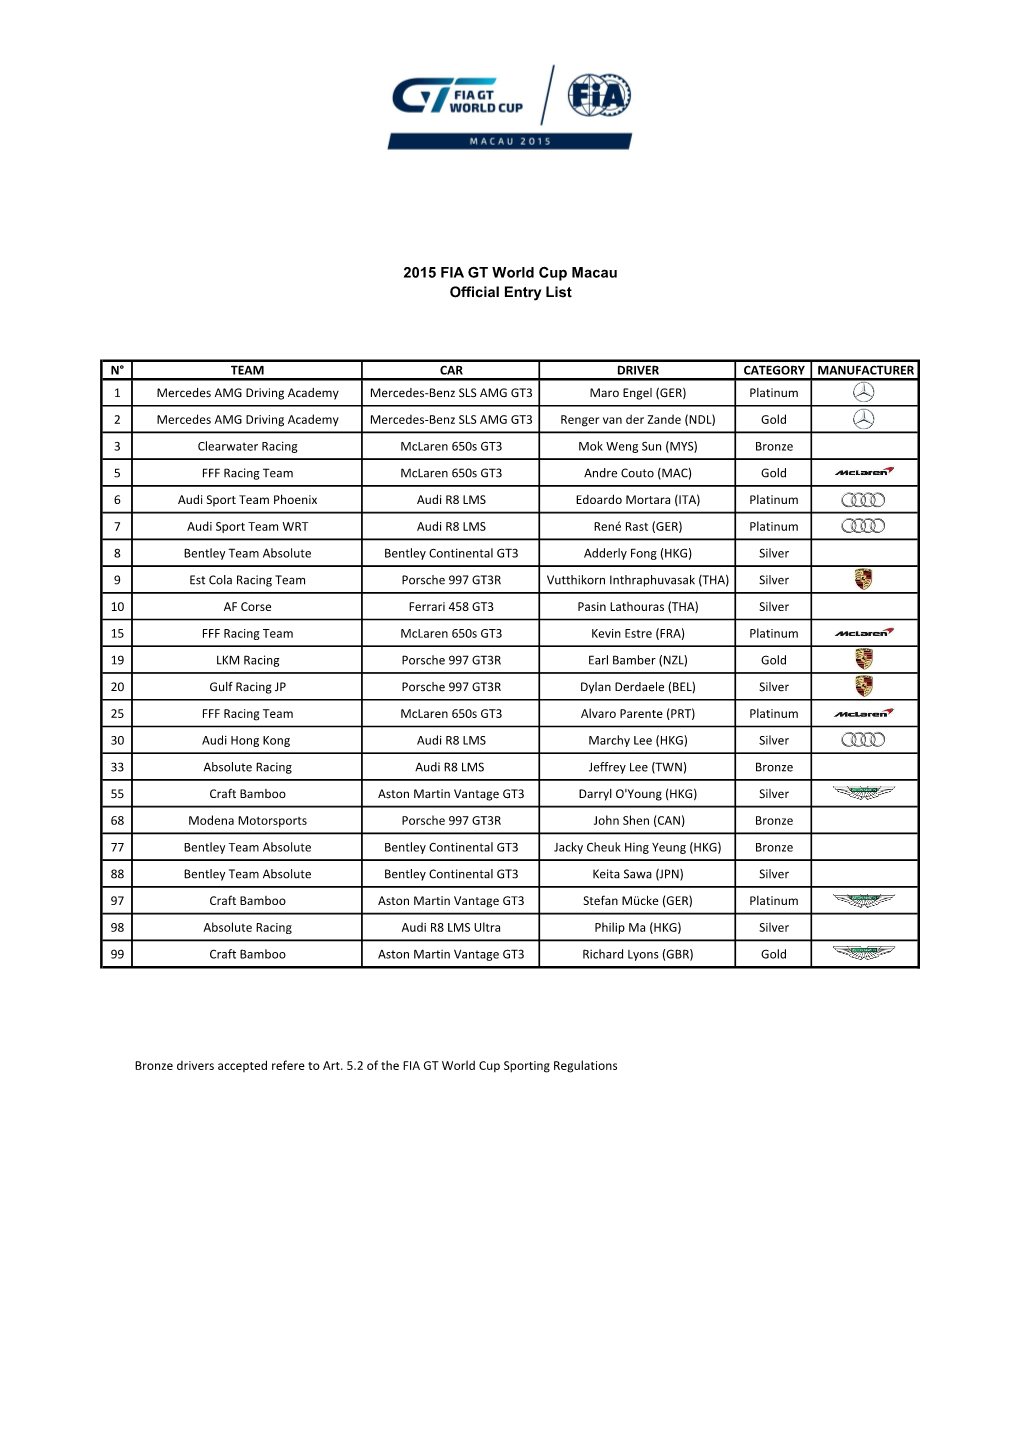 2015 FIA GT World Cup Macau Official Entry List